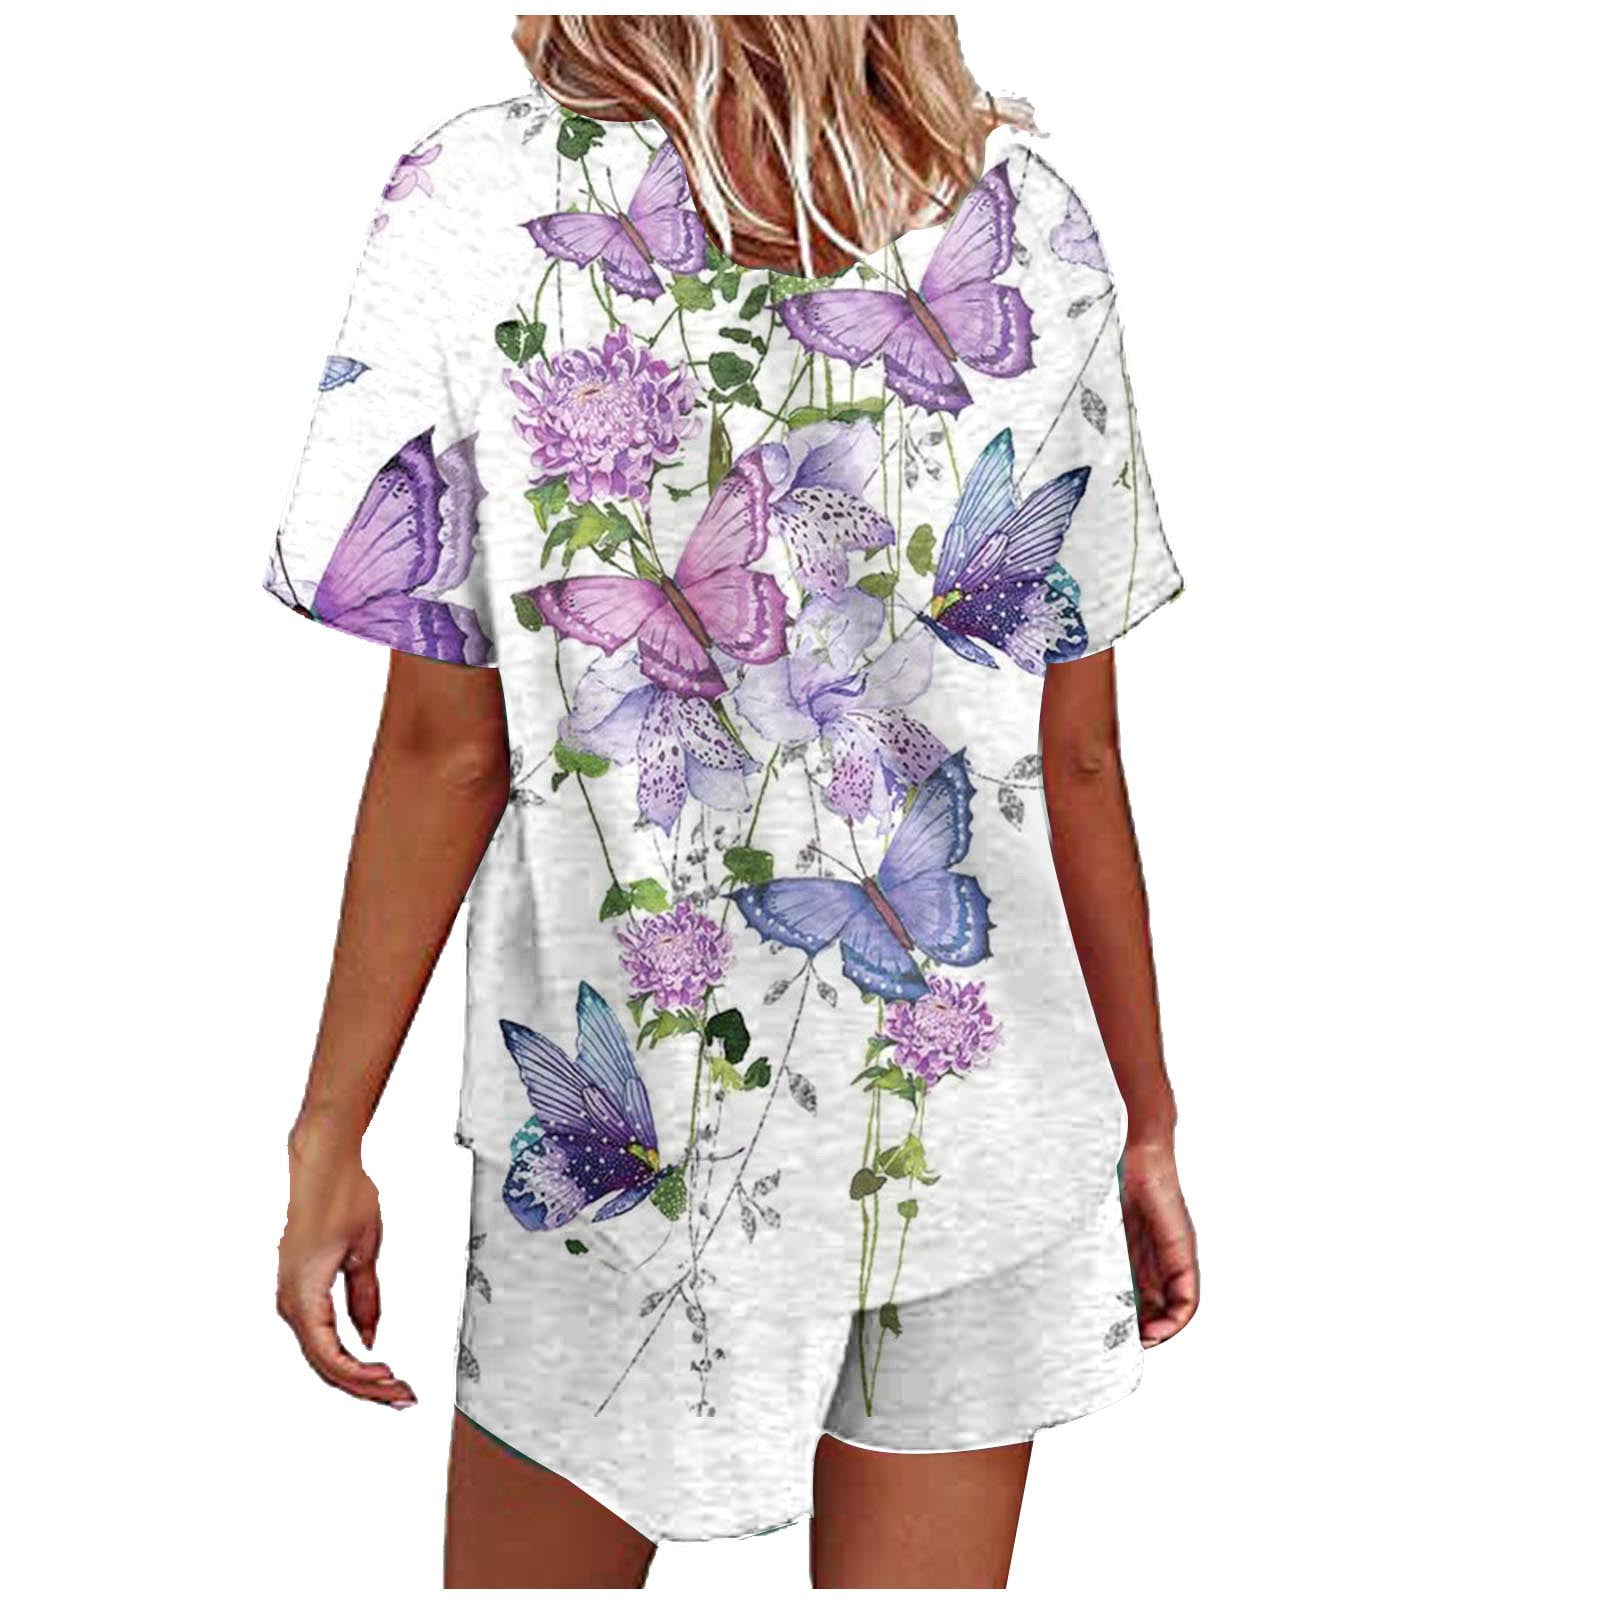 HIKO23 Womens Floral Print Tie Dye Shirts Summer Short Sleeve